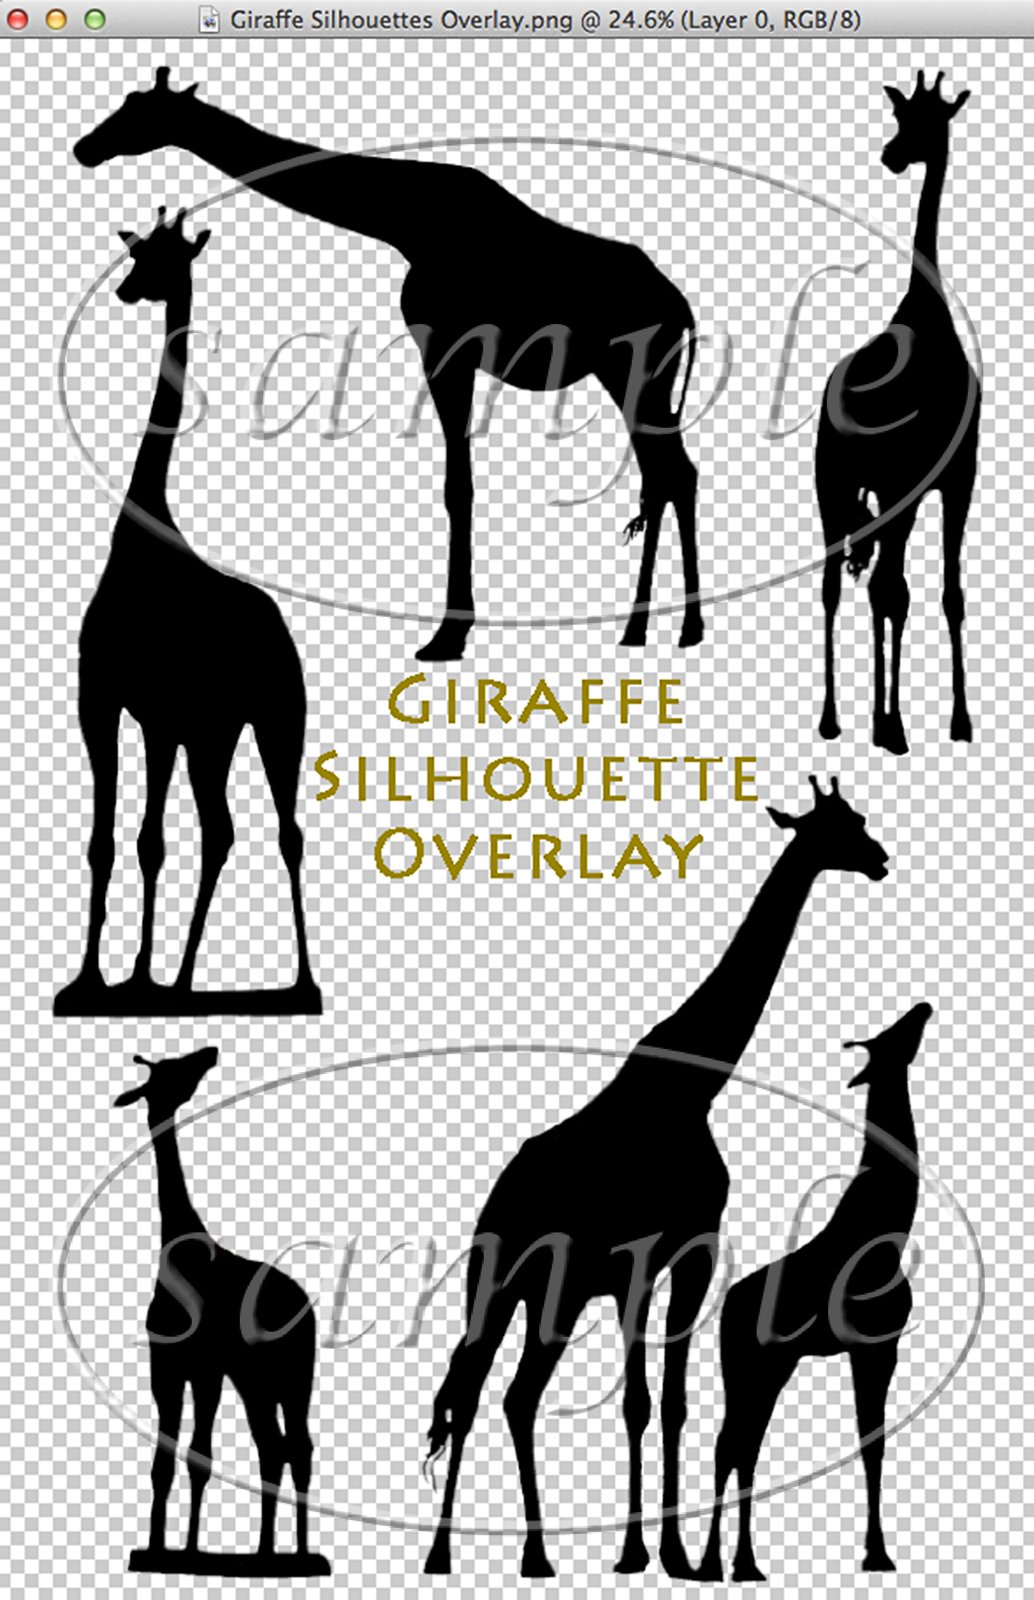 Giraffe Silhouette Overlay / Shoot for the Moon Images ...